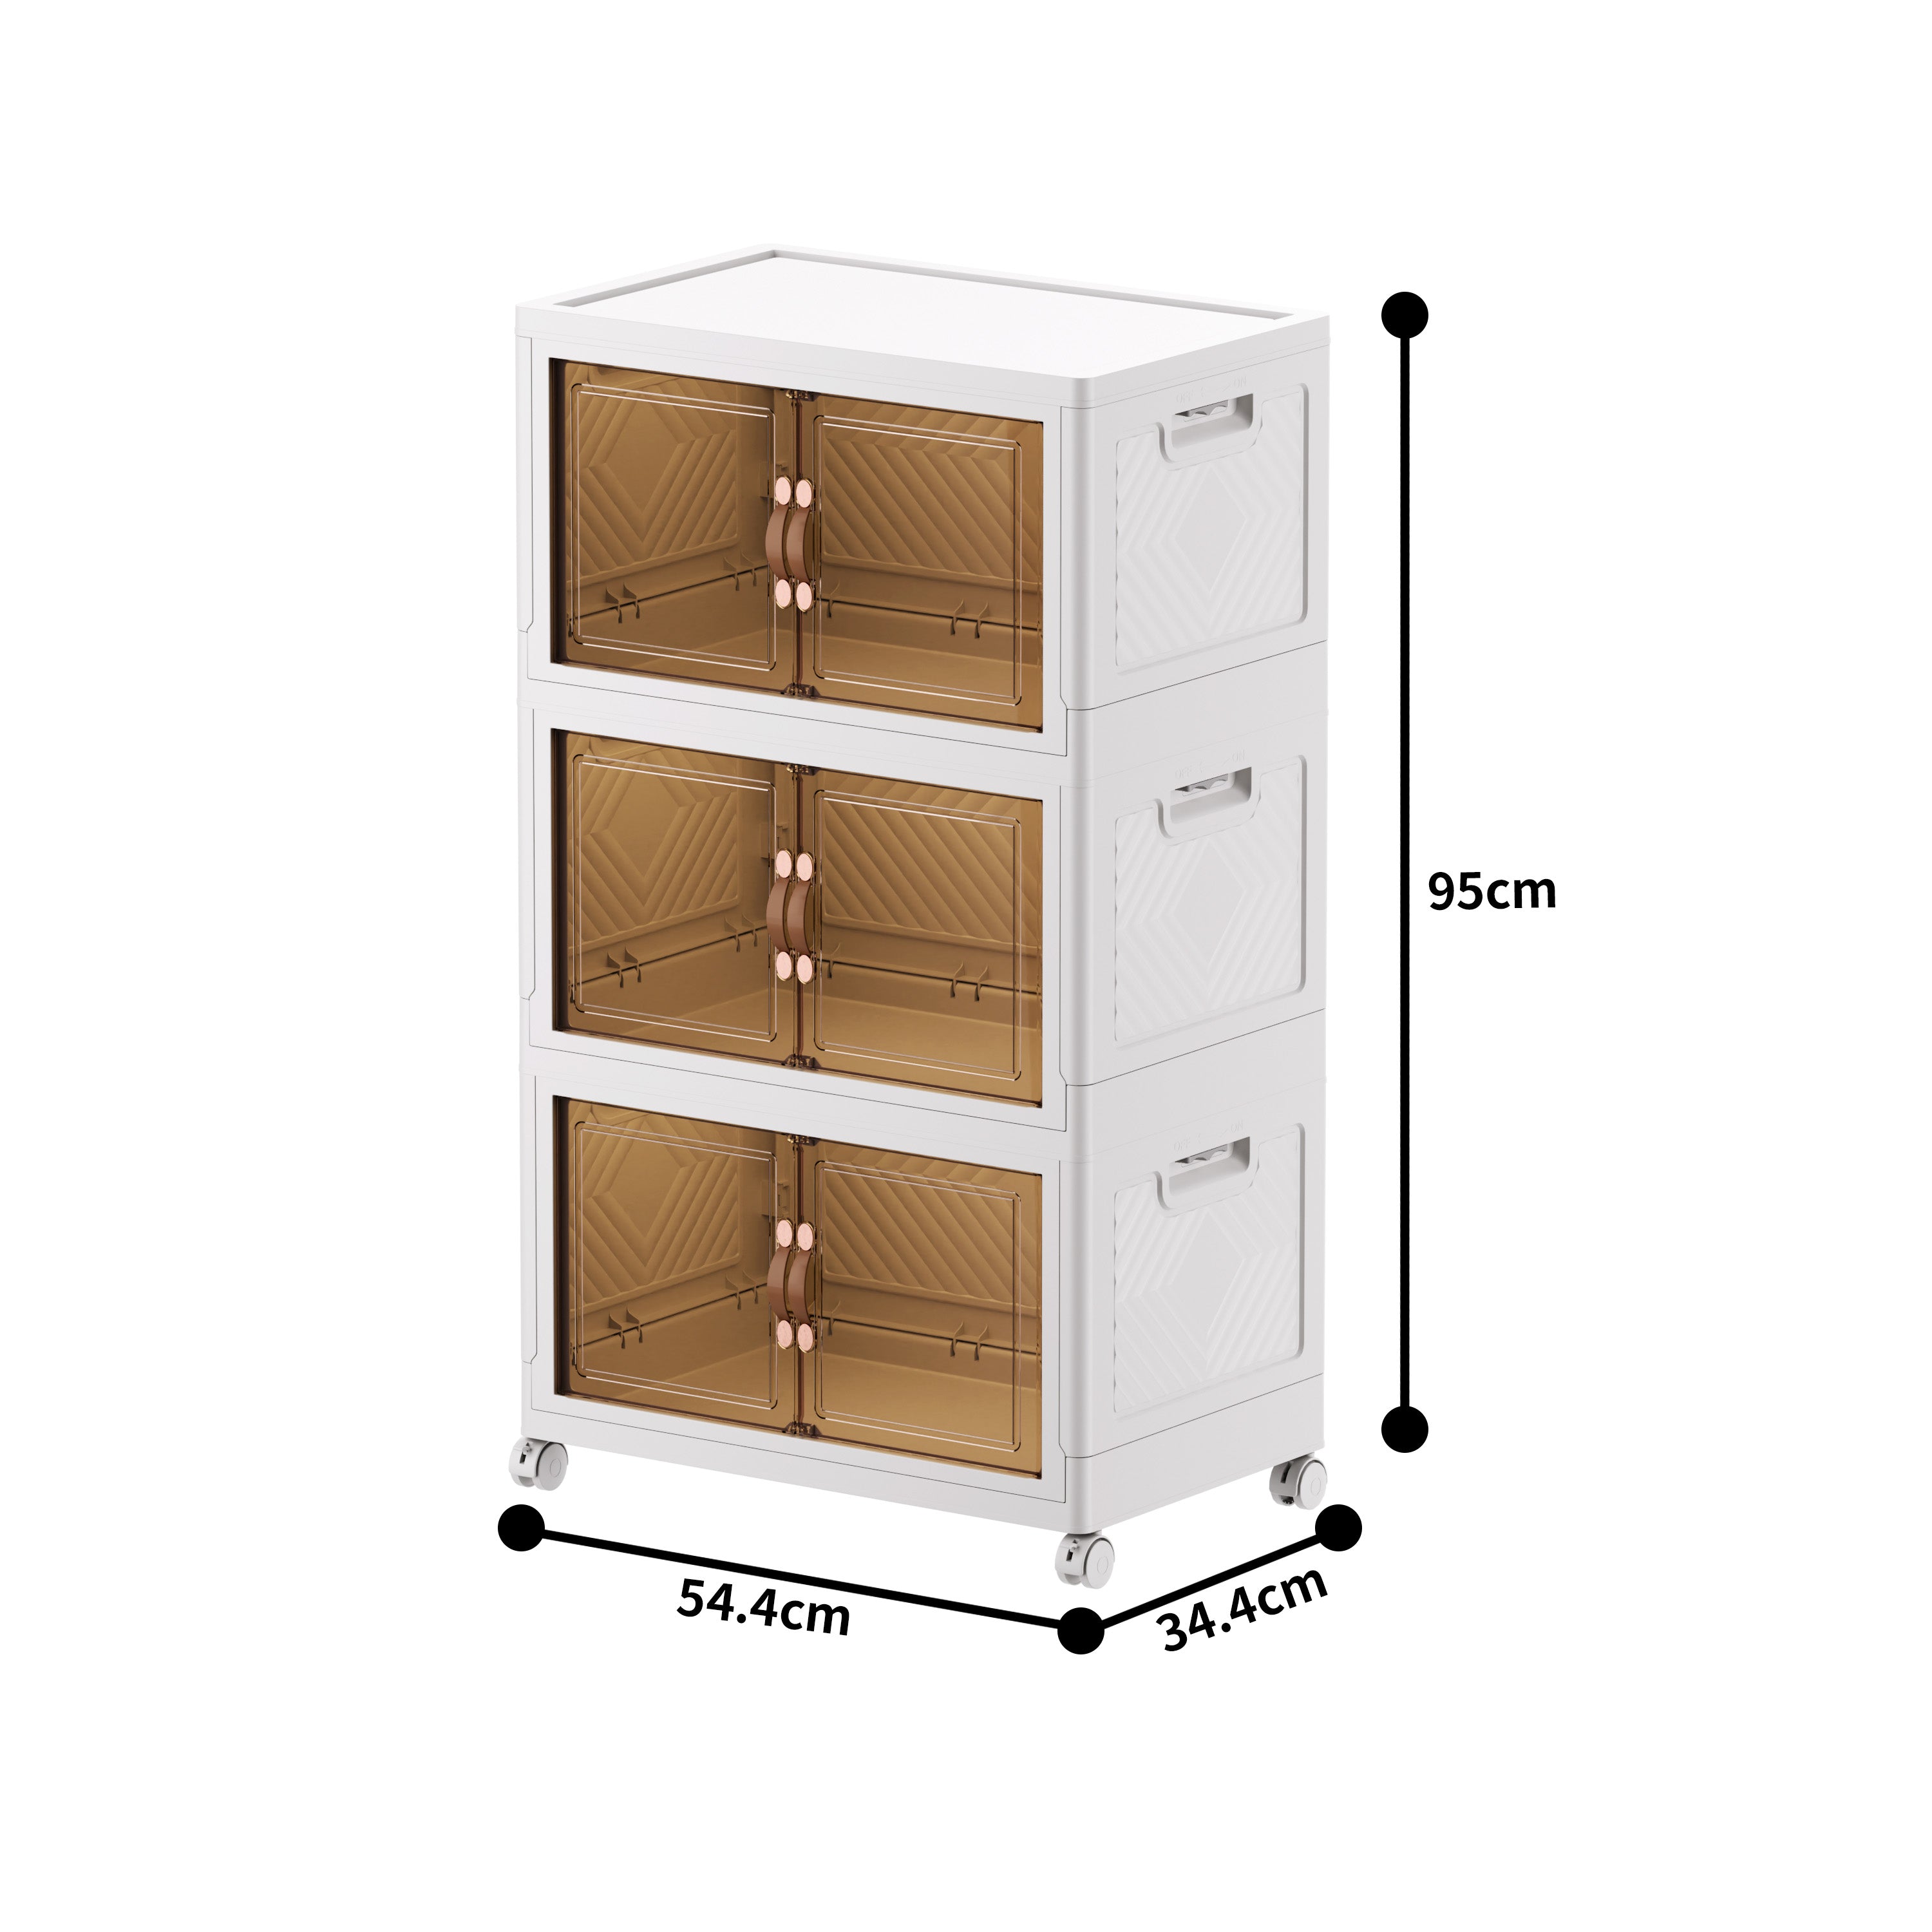 【KSA STOCK】Foldable plastic storage box with wheels and doors, three shelves, medium size, 95*55cm  NK007